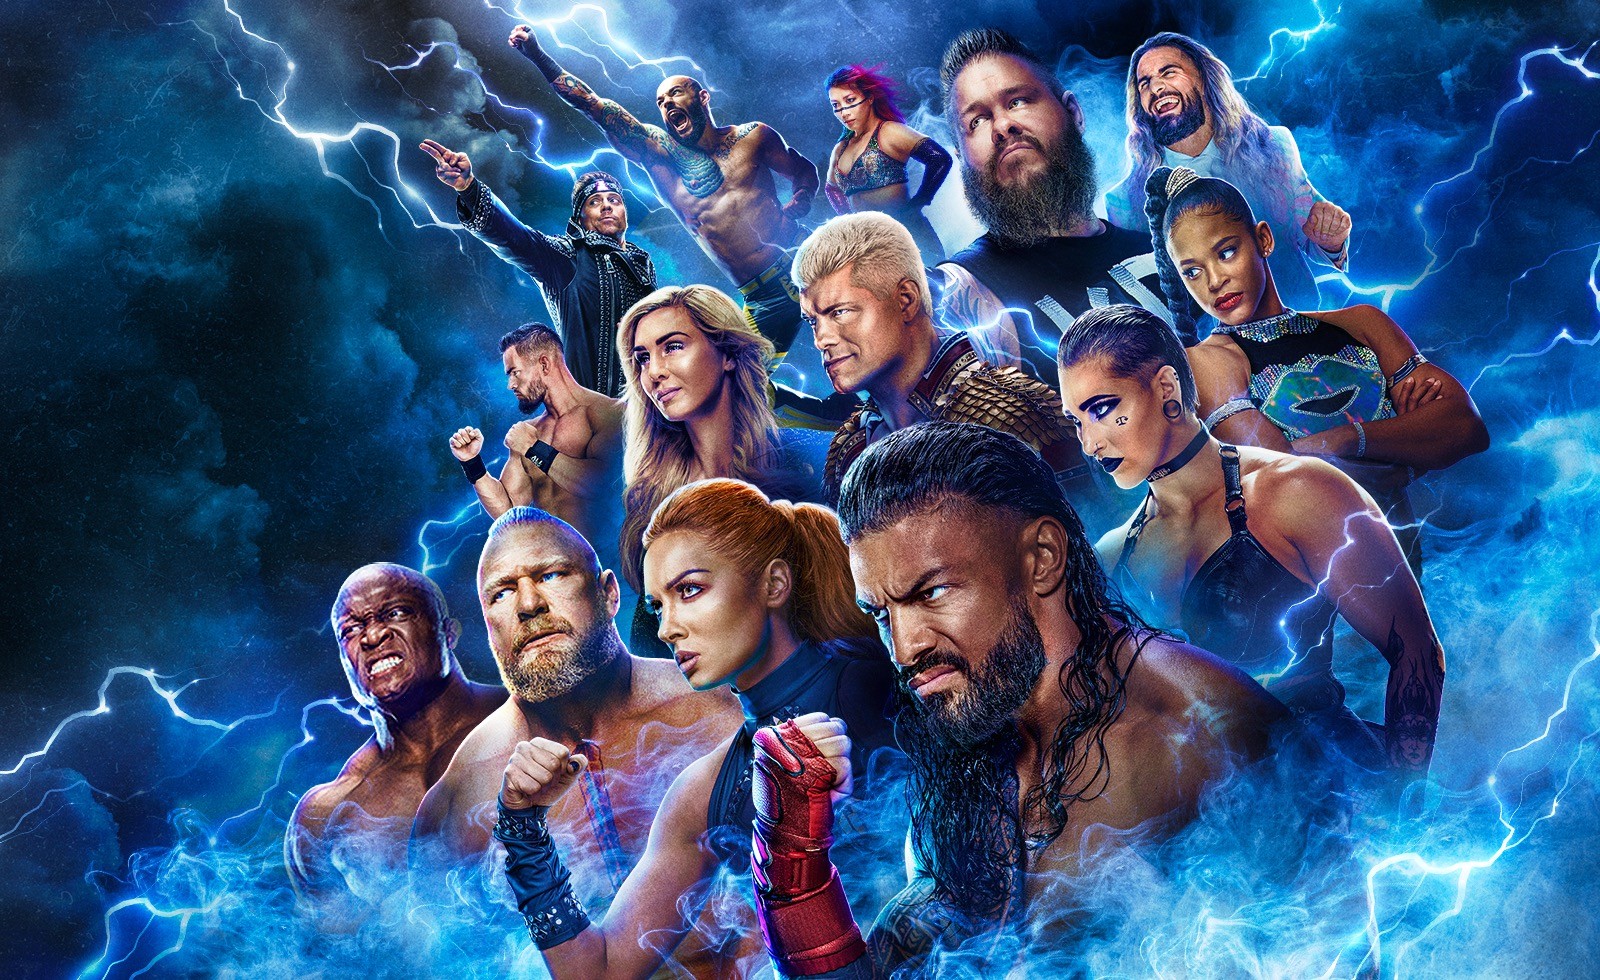 WWE Royal Rumble returns to San Antonio Saturday with stacked card at